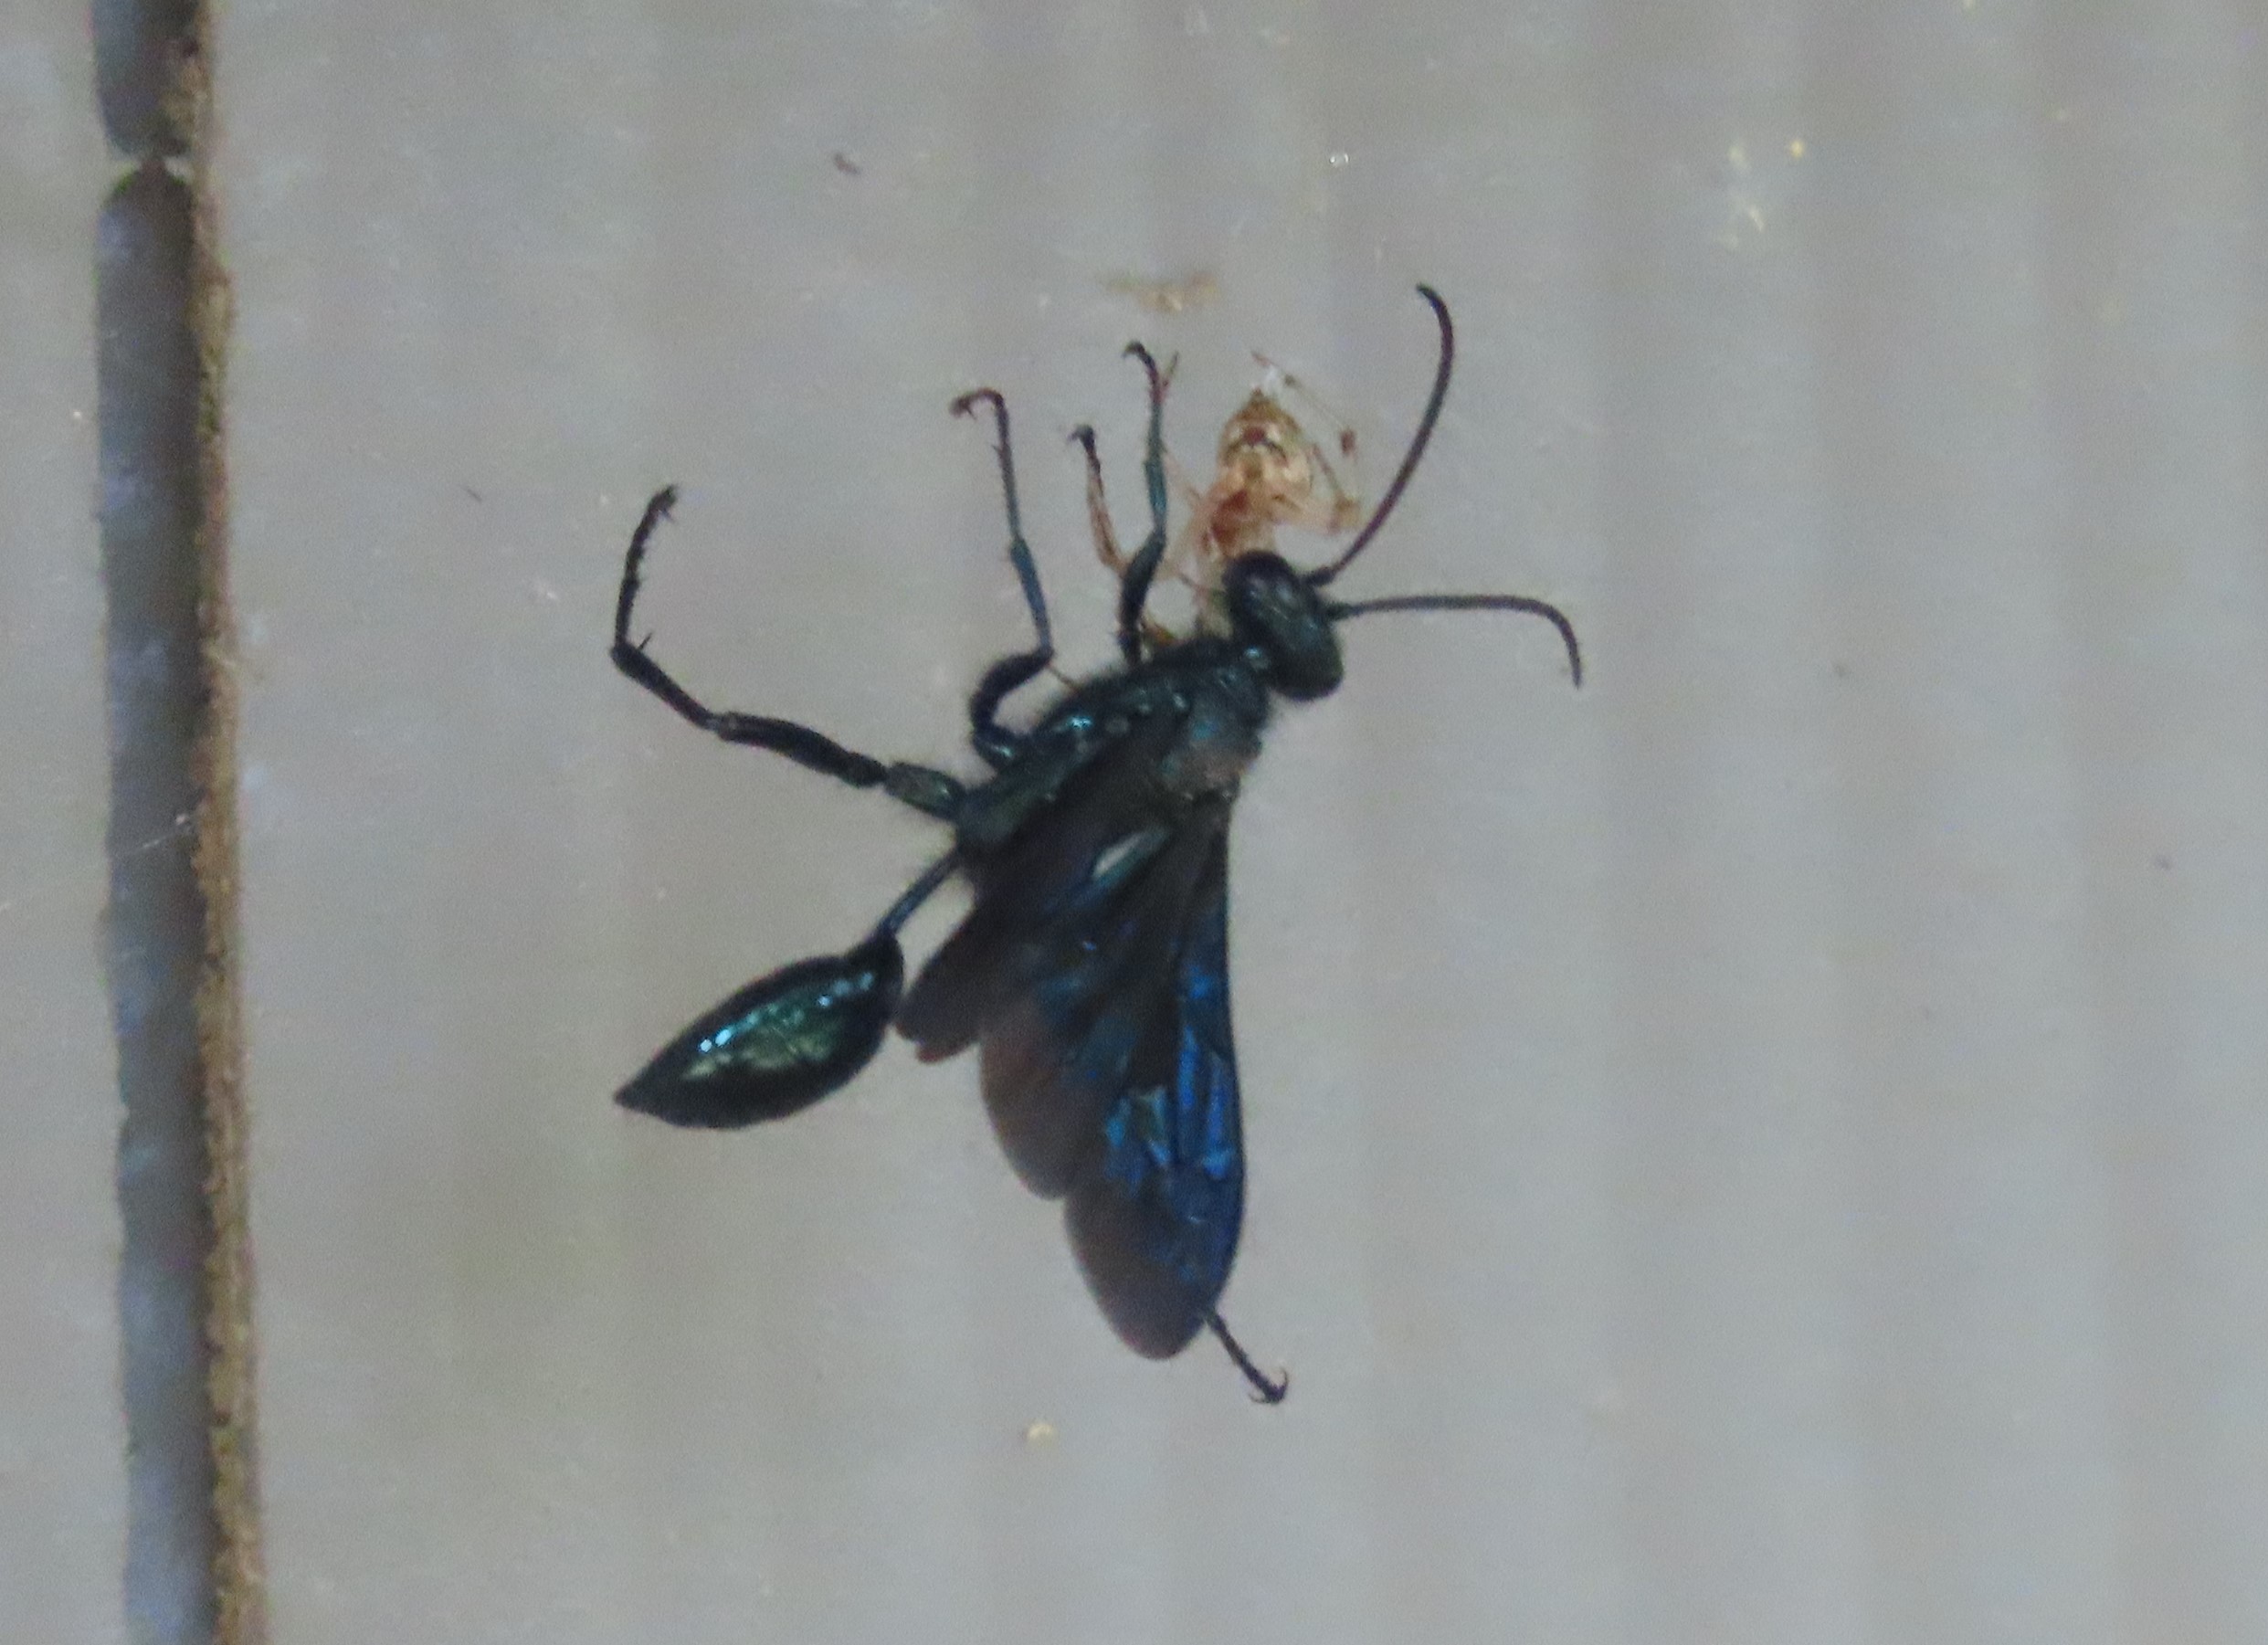 Bug Eric: Wasp Wednesday: Blue Mud Dauber